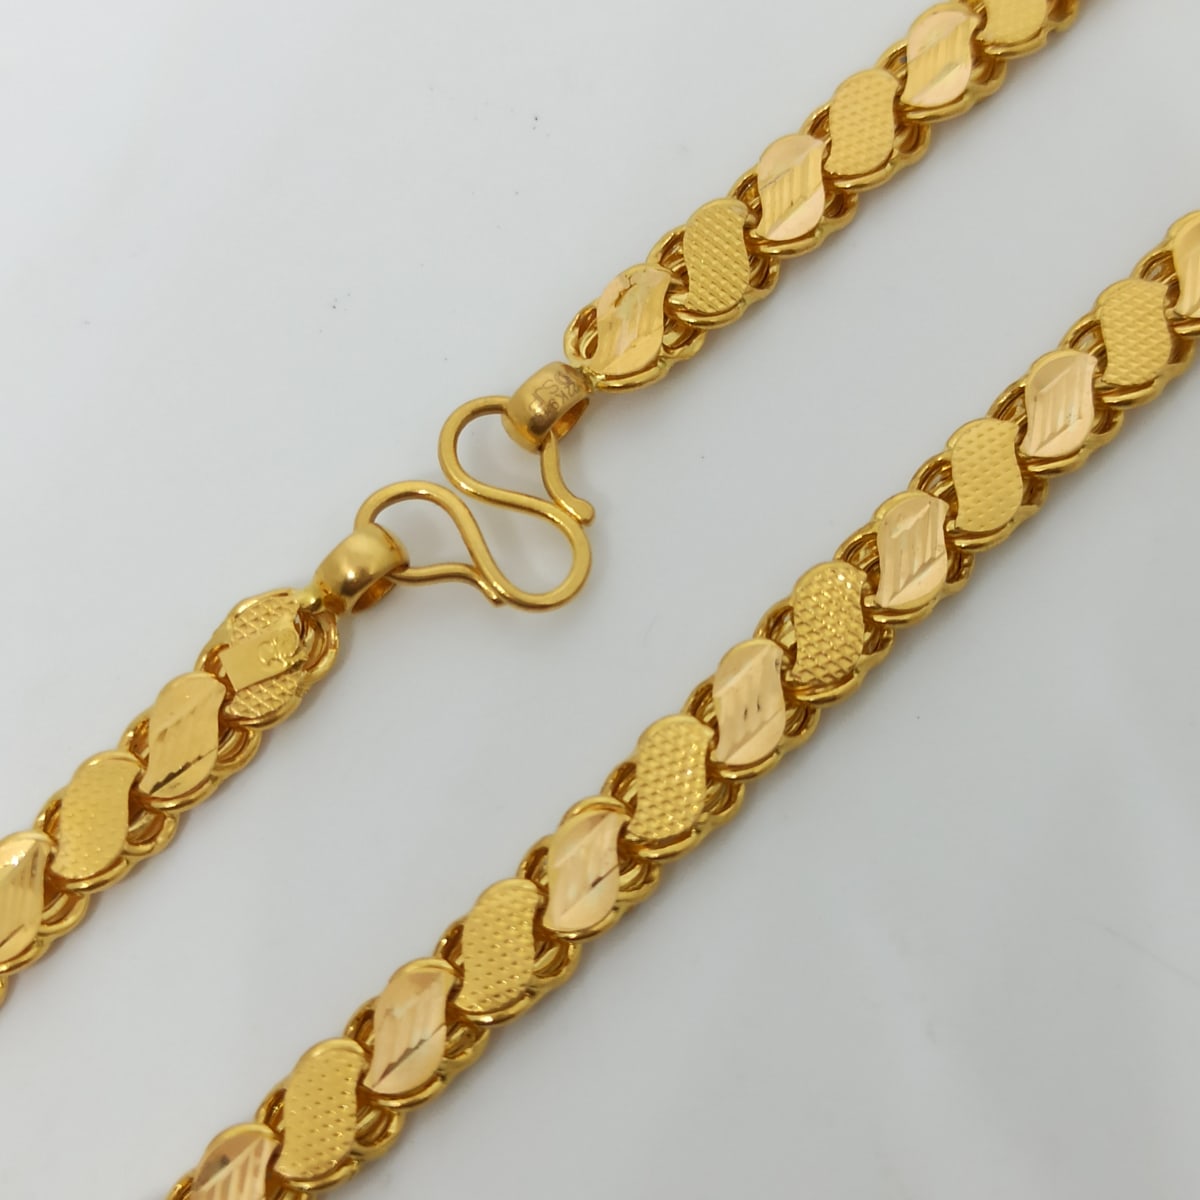 Buy S Leaf Chain Online | Sri Jain Jewellery - JewelFlix